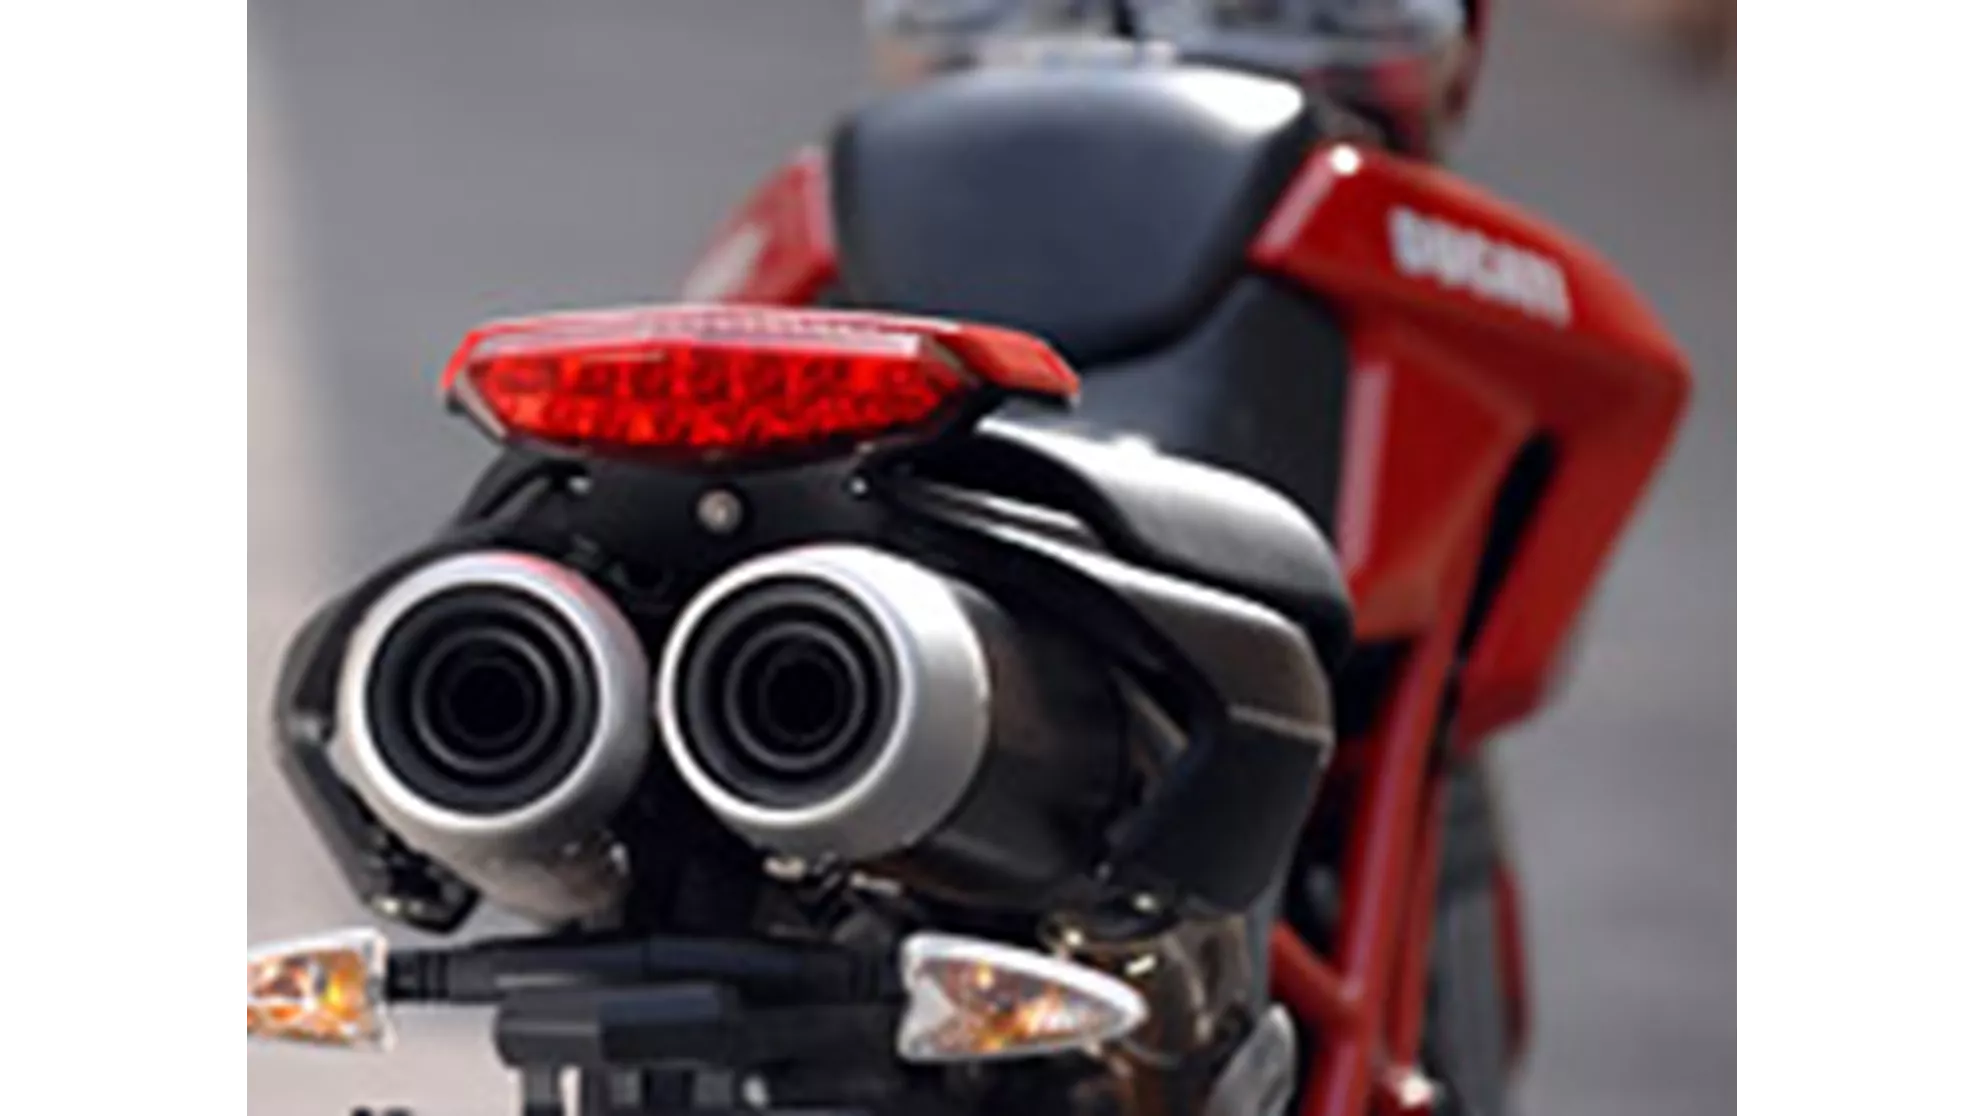 Ducati Hypermotard 796 - Image 8